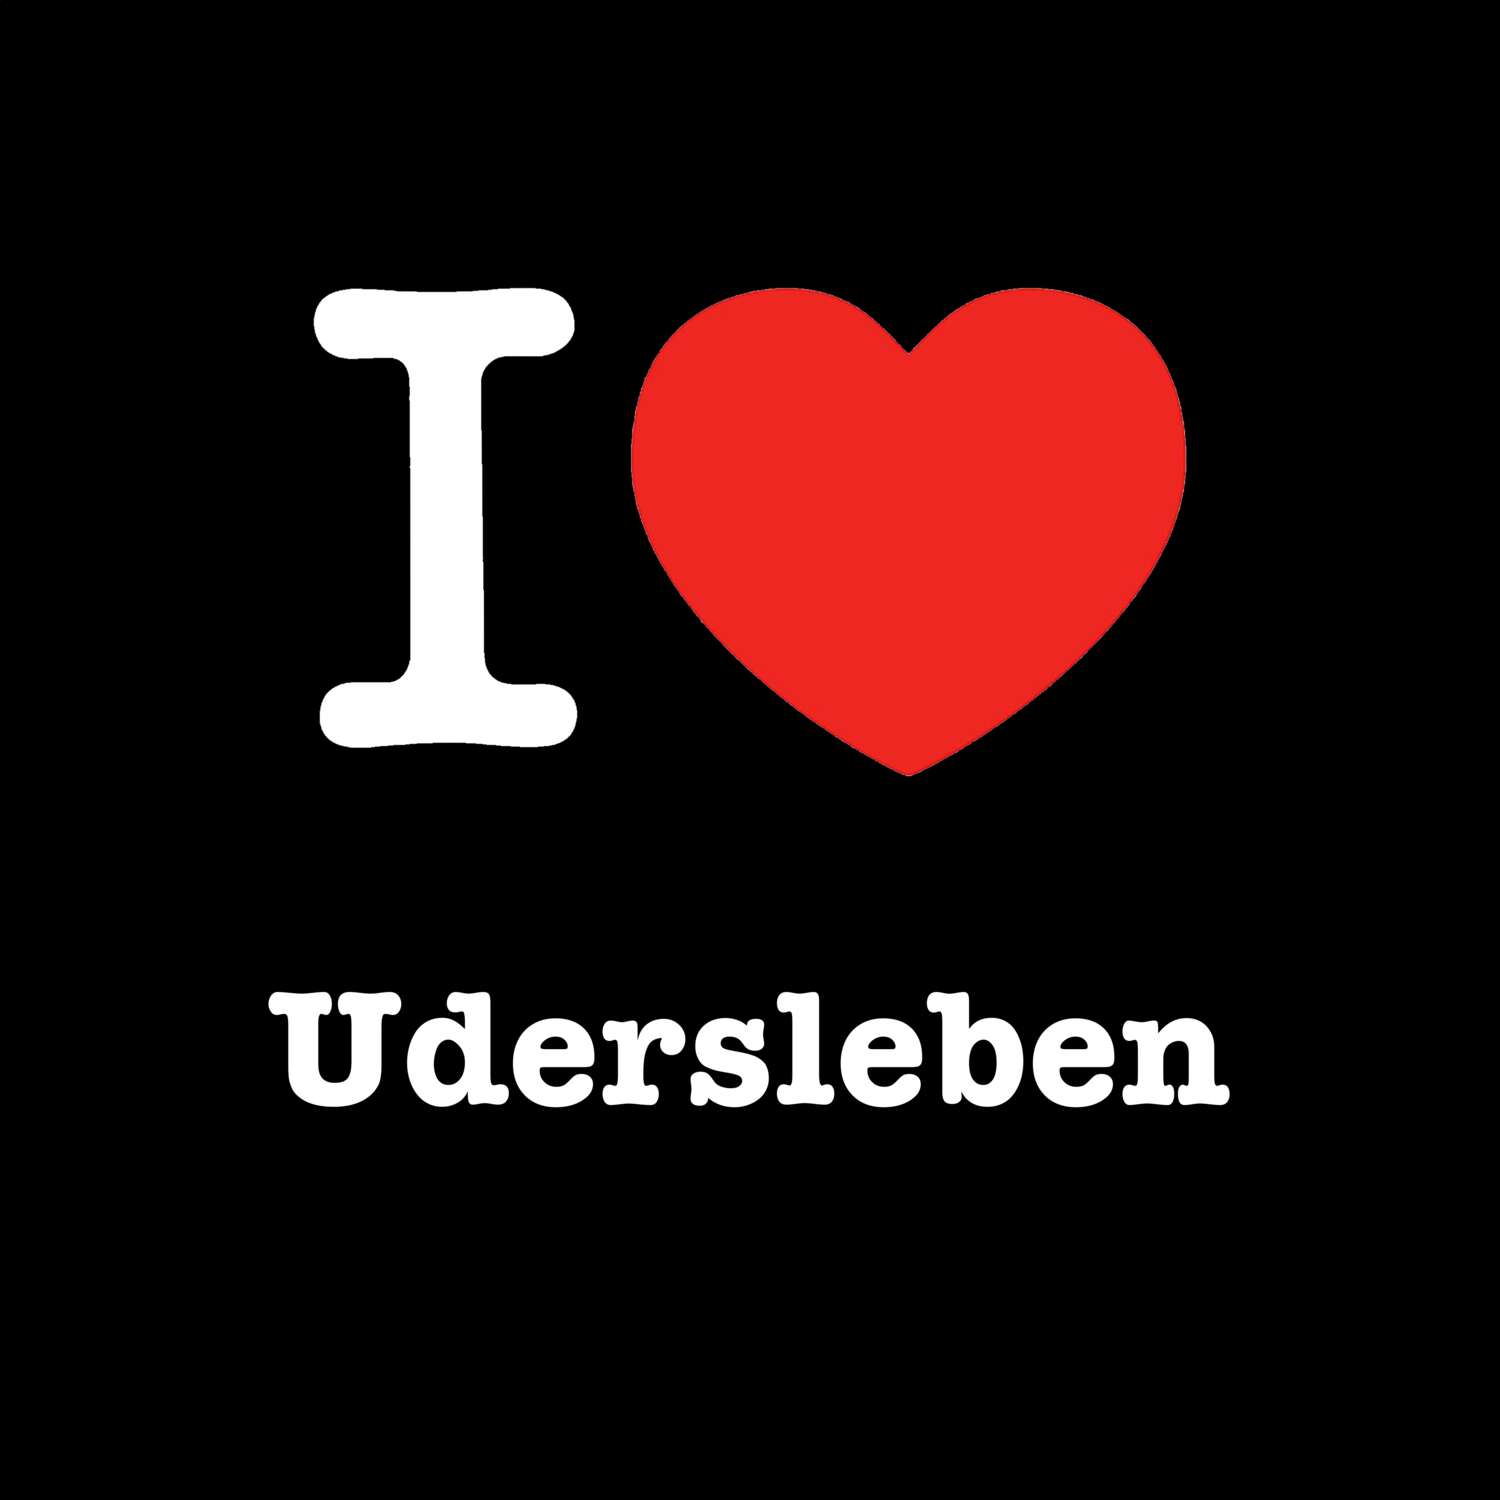 Udersleben T-Shirt »I love«